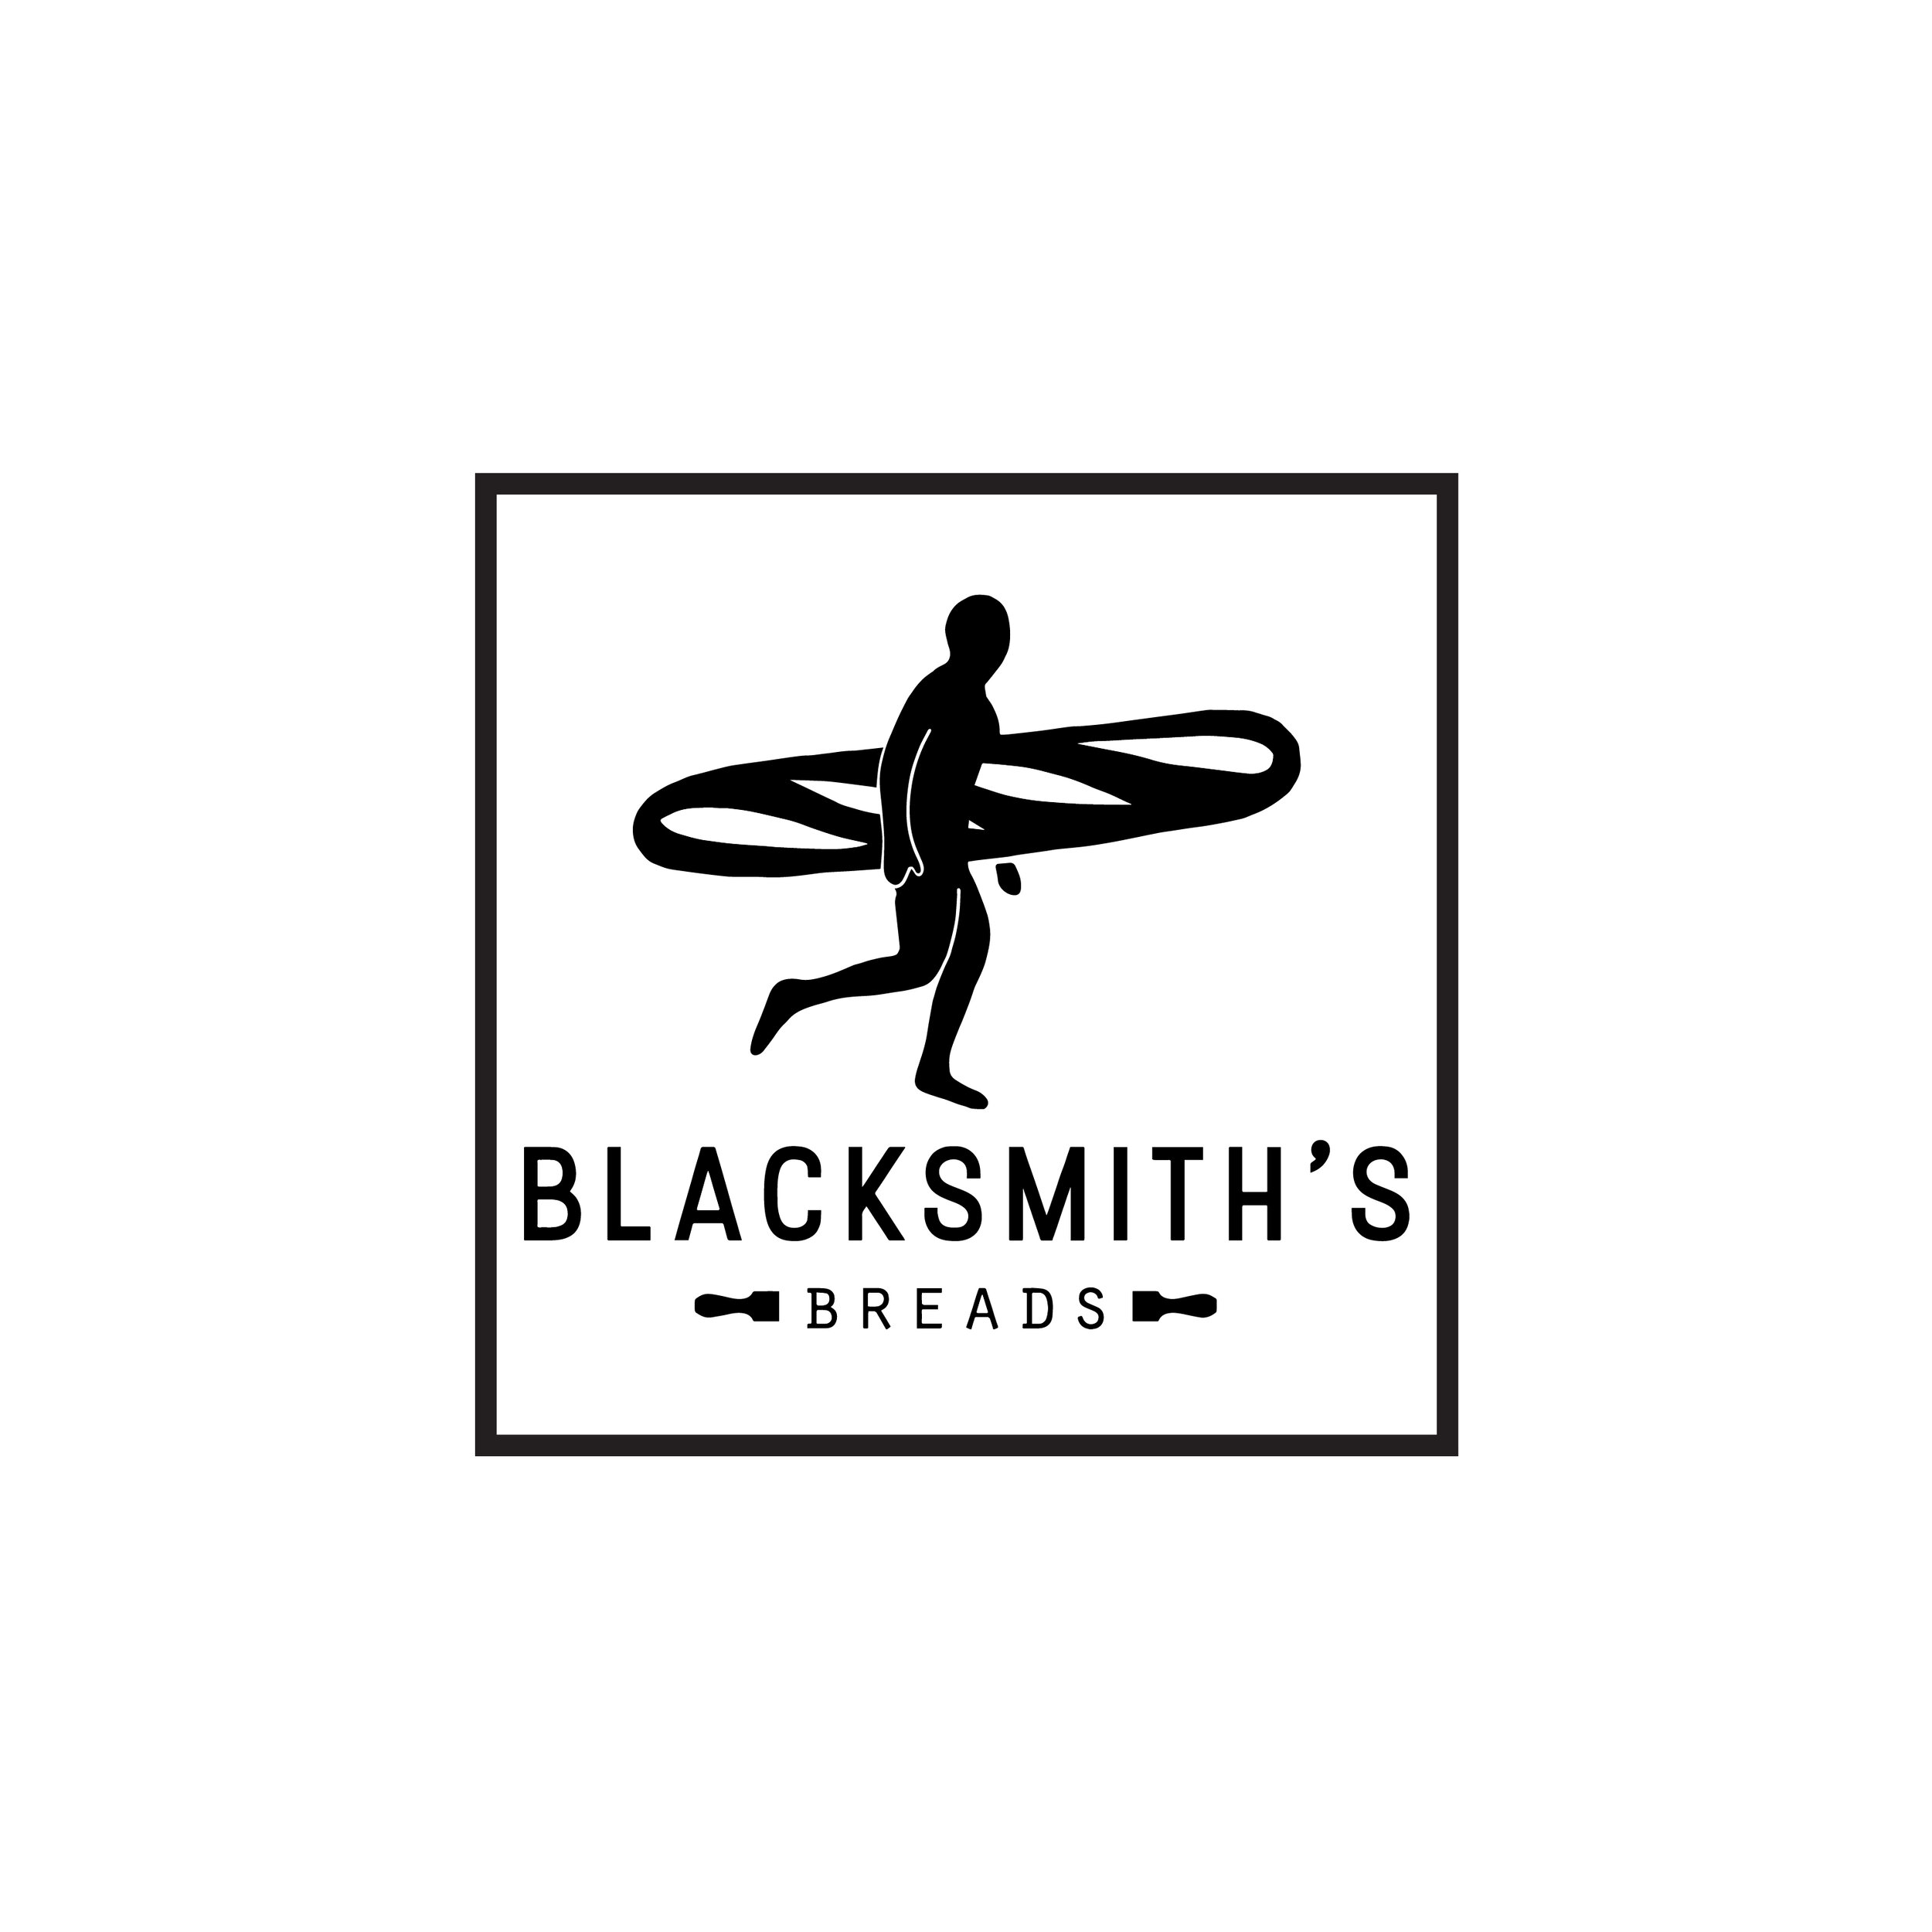 Blacksmiths Breads Patches-05.jpg